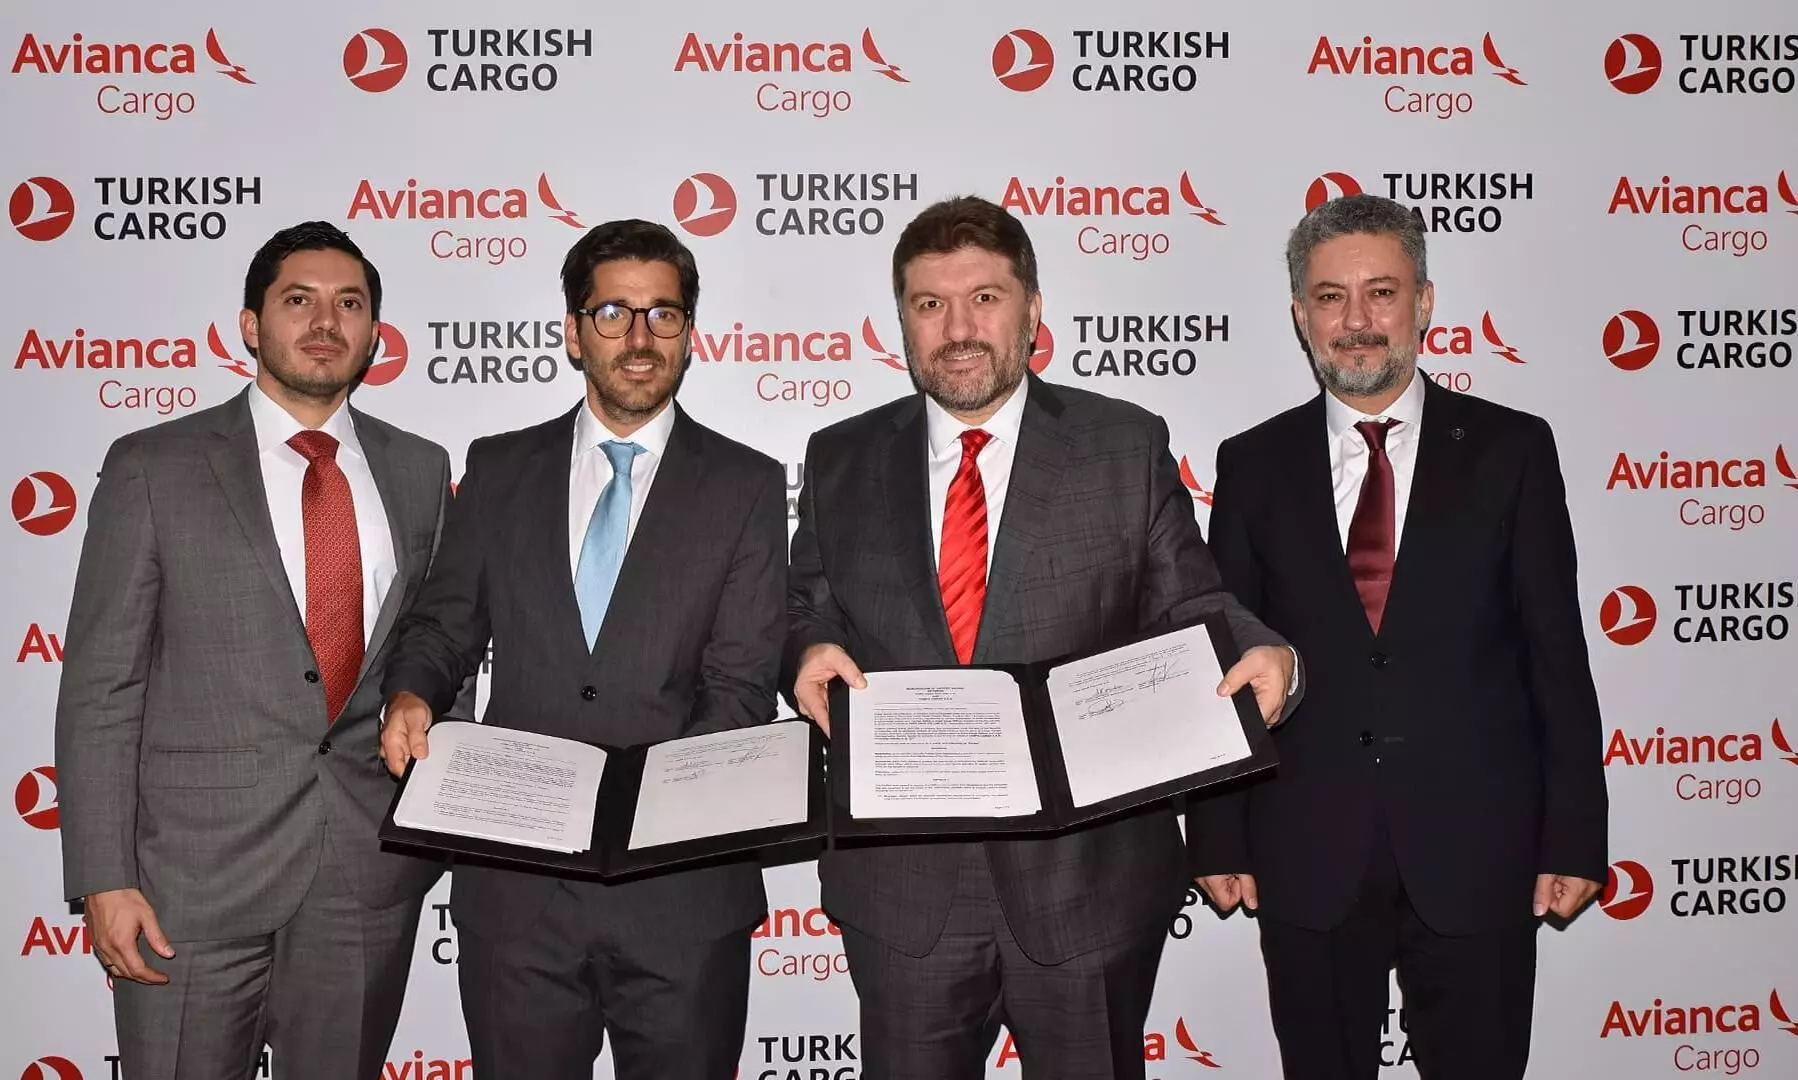 Turkish Cargo, Avianca Cargo sign MoU to enhance global reach